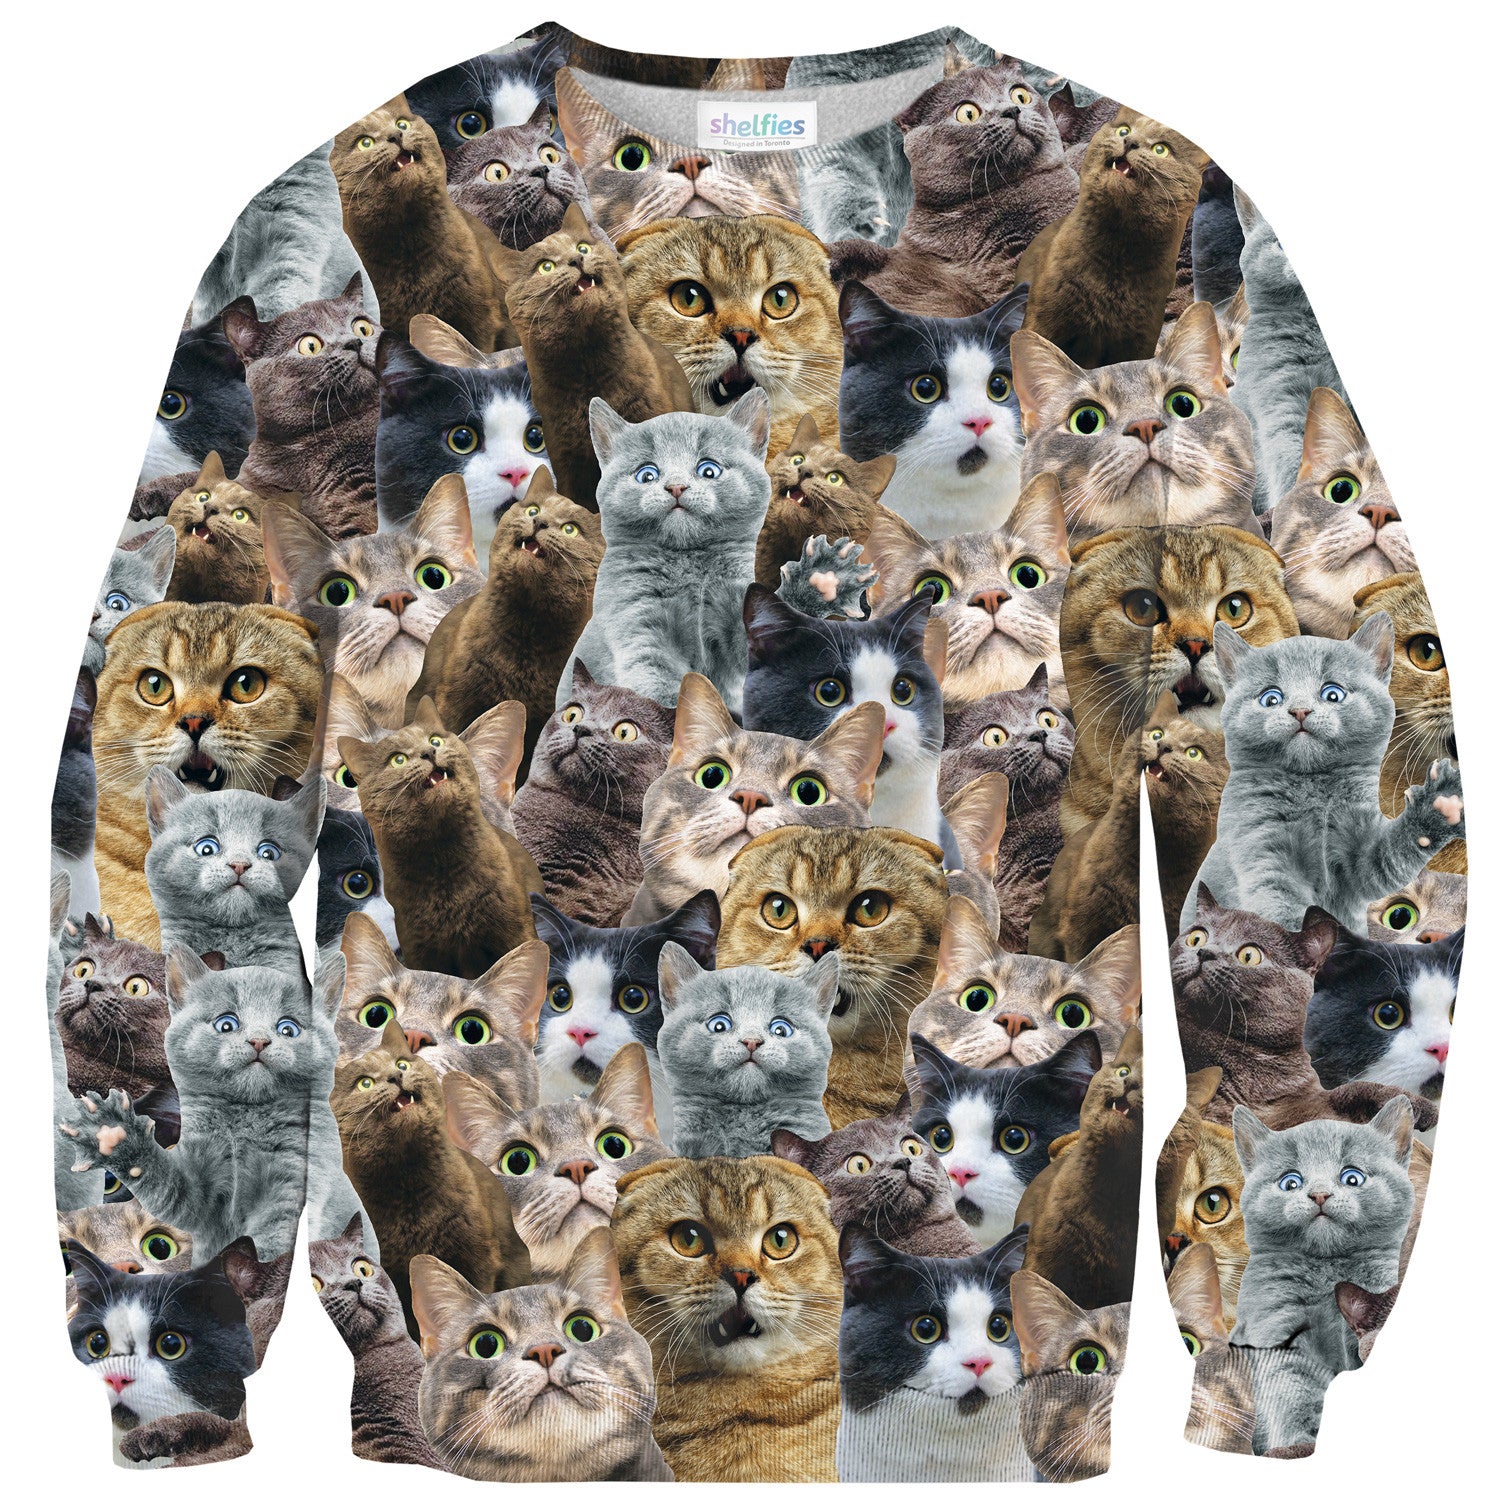 Scaredy Cat Invasion T-Shirt